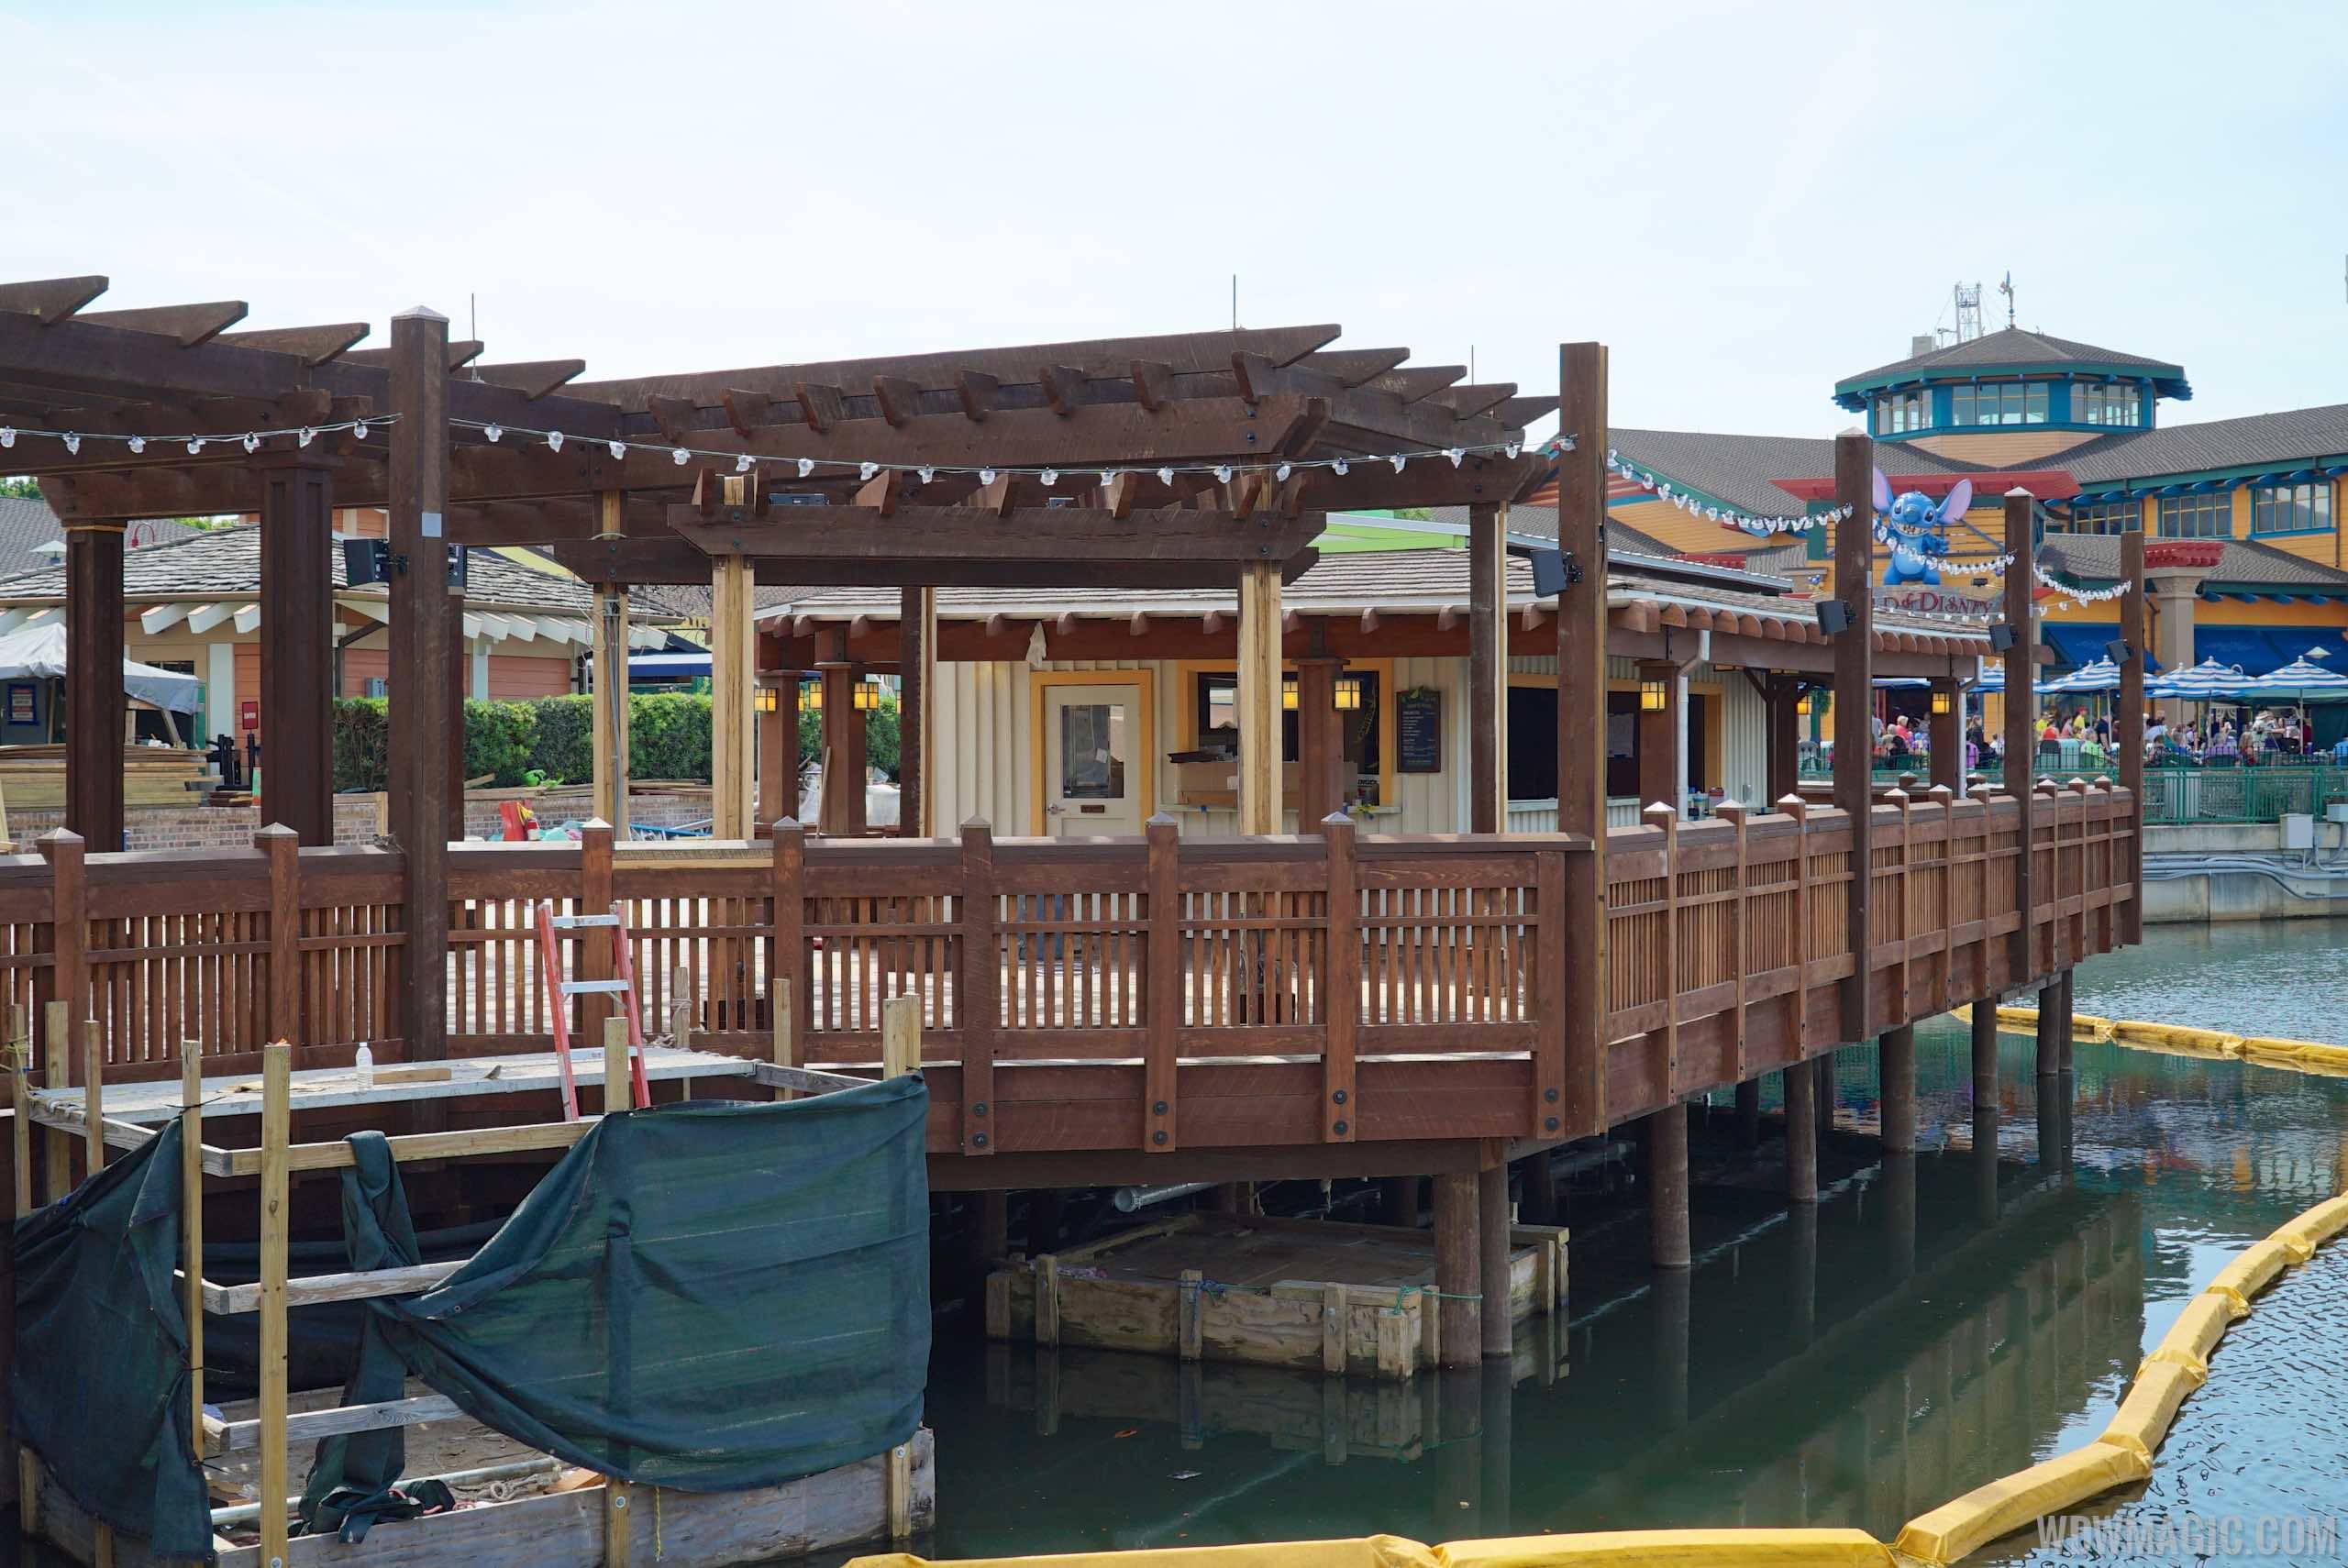 PHOTOS - Disney Springs Margarita Bar construction update